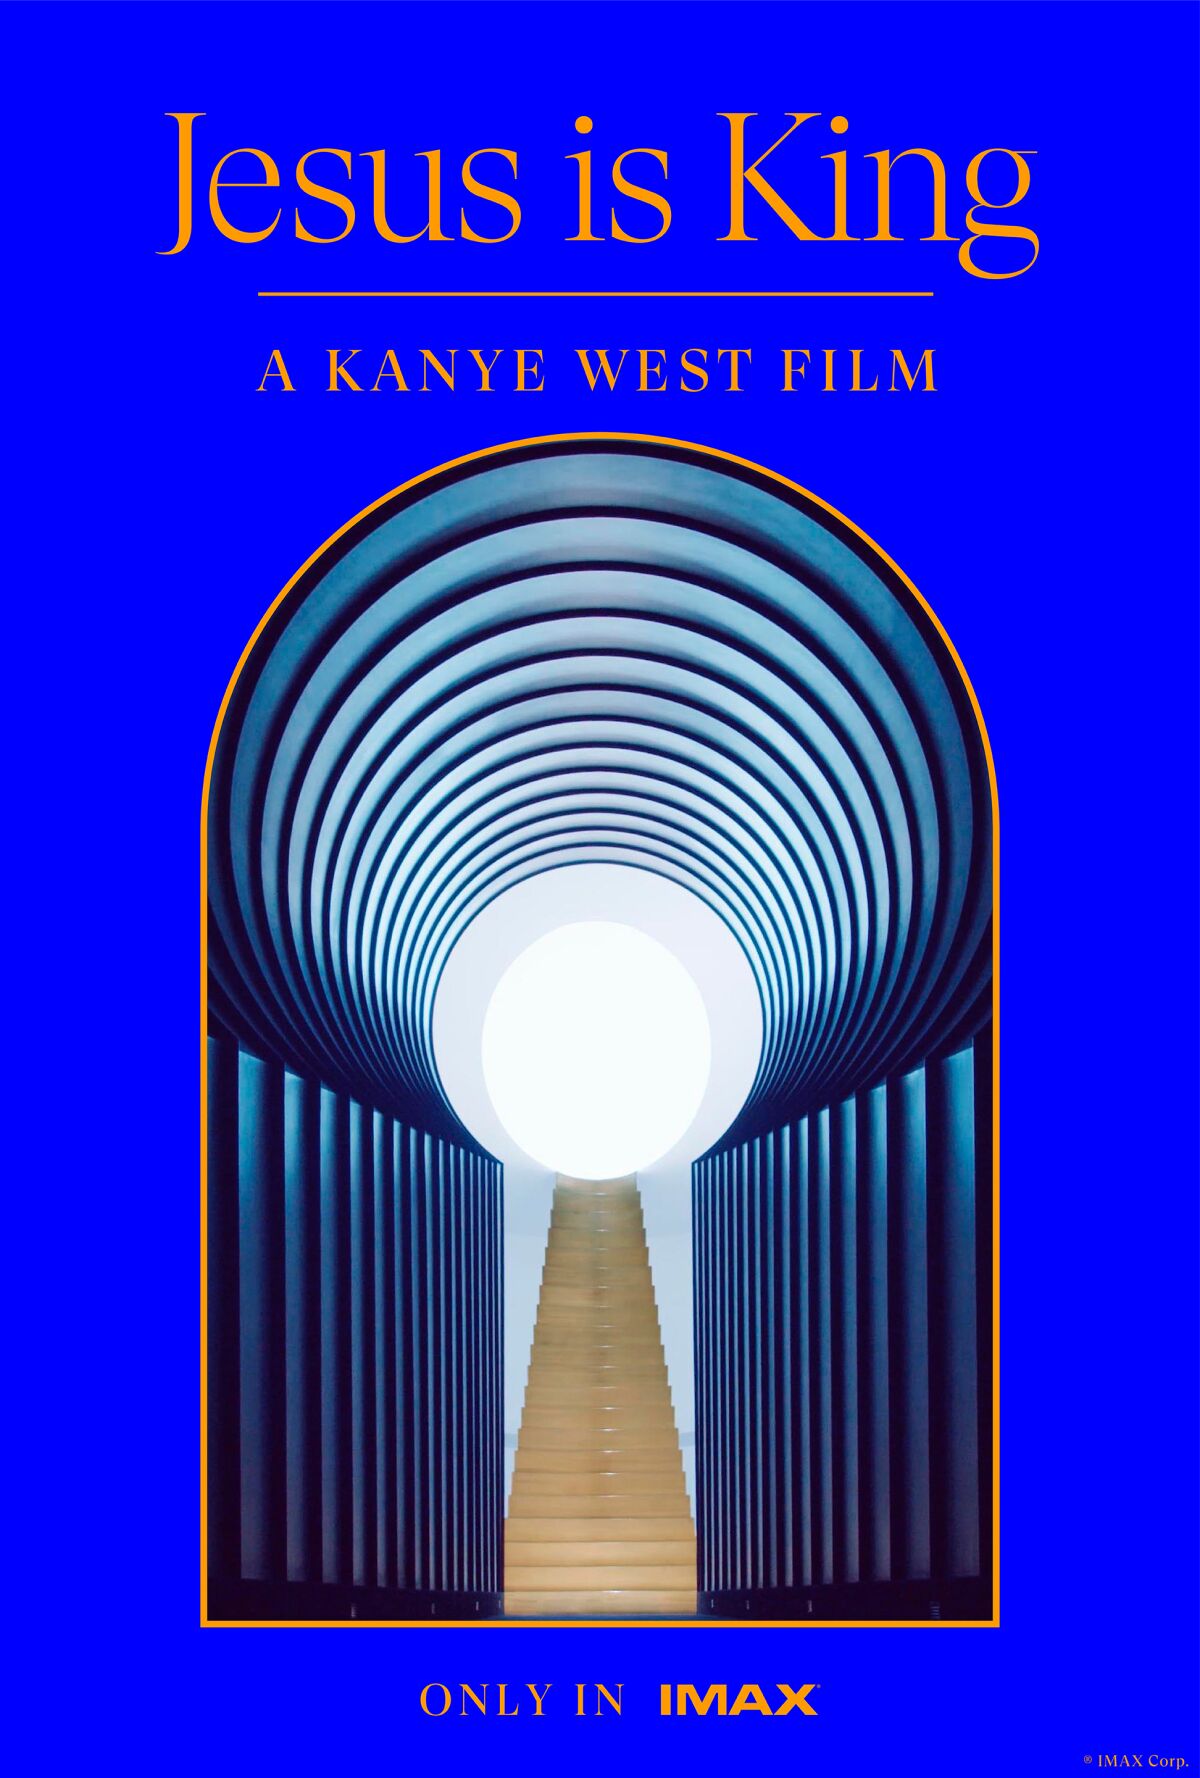 Kanye West's "Jesus Is King" movie poster